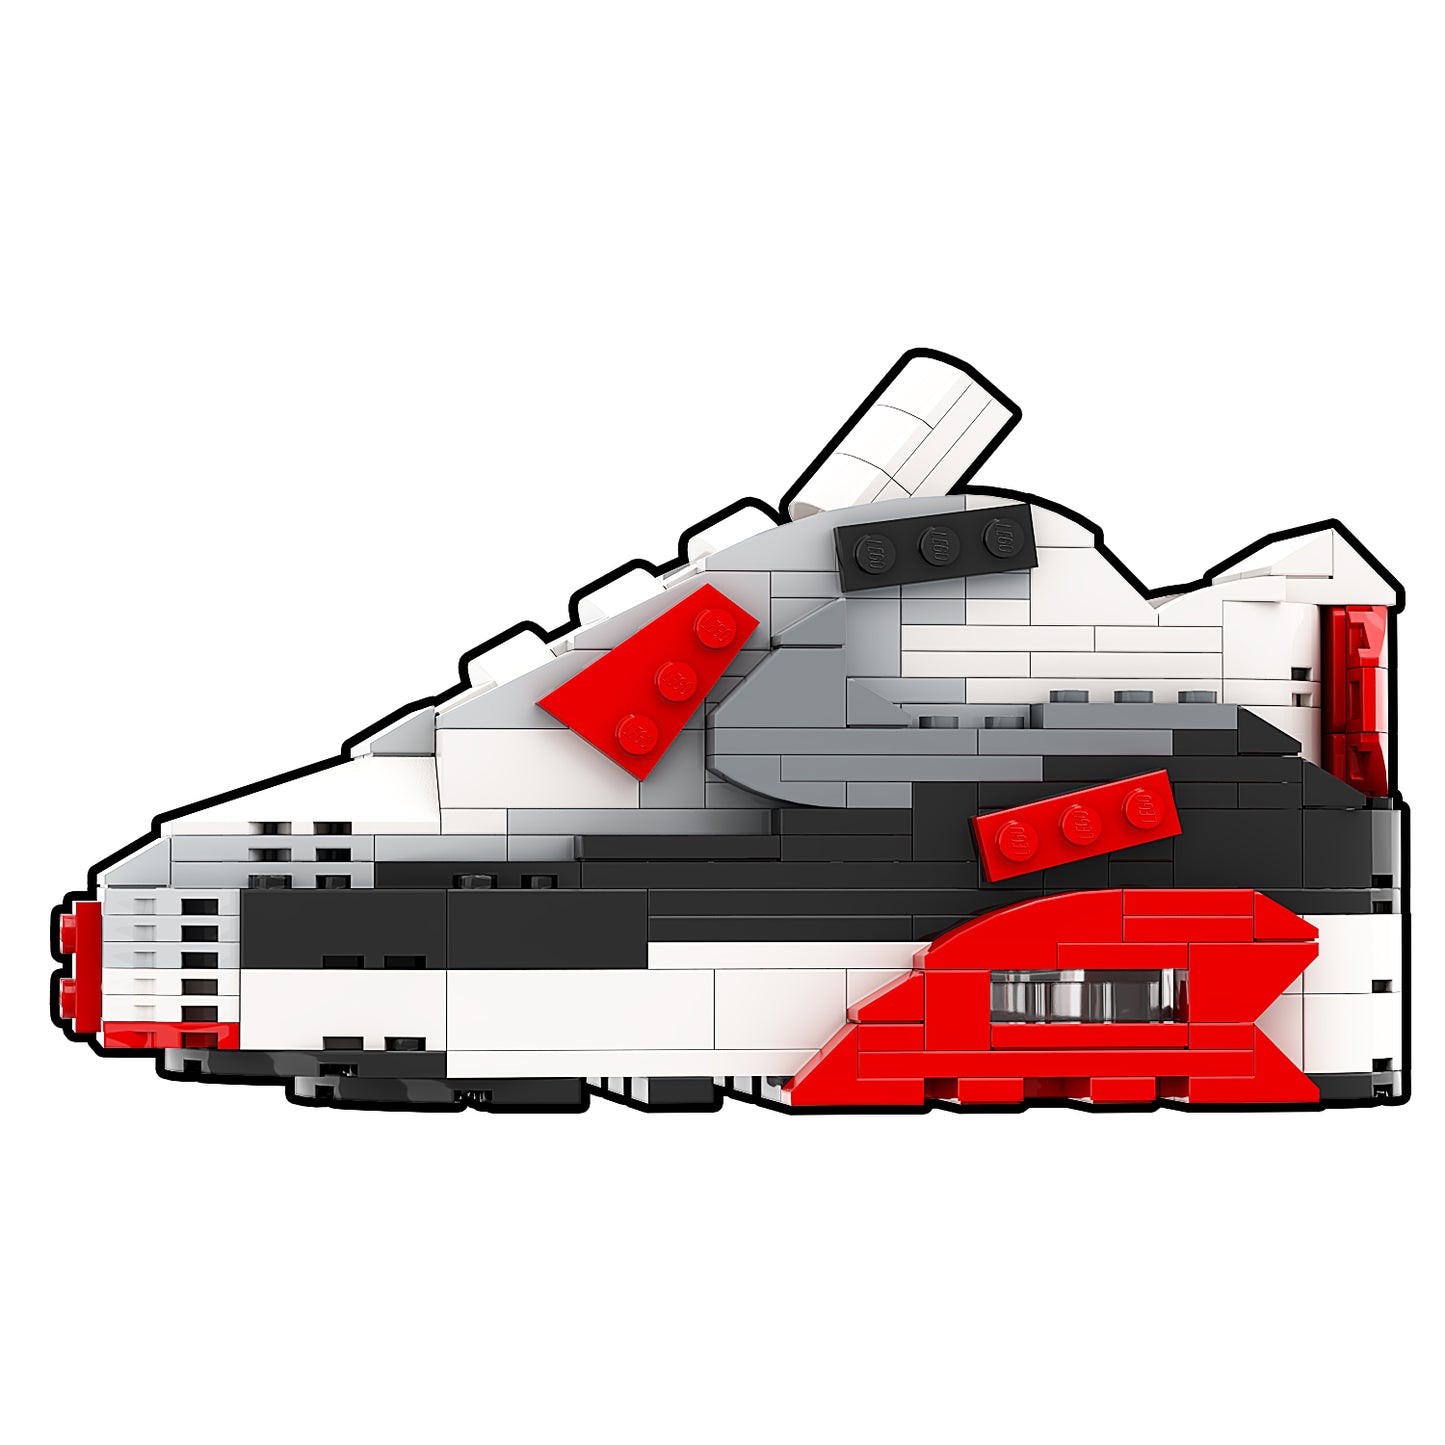 REGULAR "Air Max 90 Infrared" Sneaker Bricks with Mini Figure